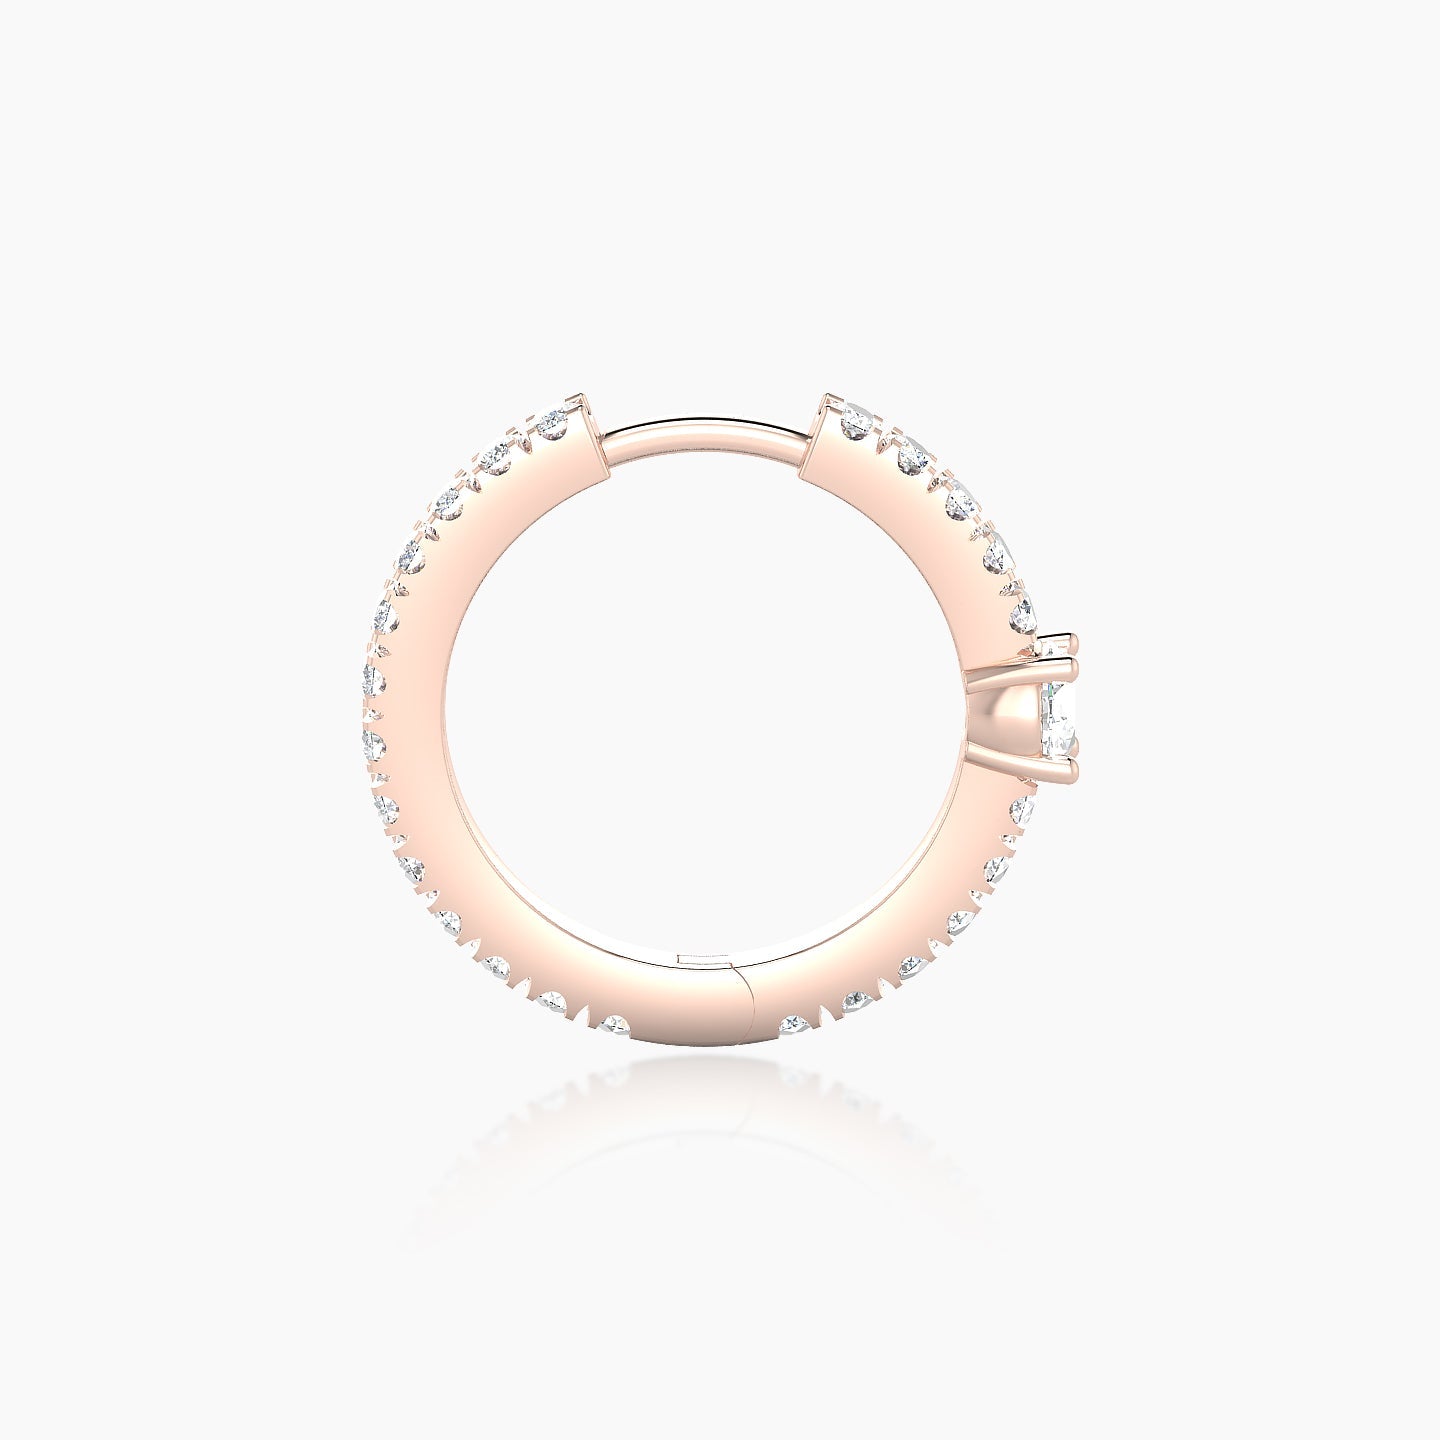 Inanna | 18k Rose Gold 9.5 mm Round Diamond Nose Ring Piercing